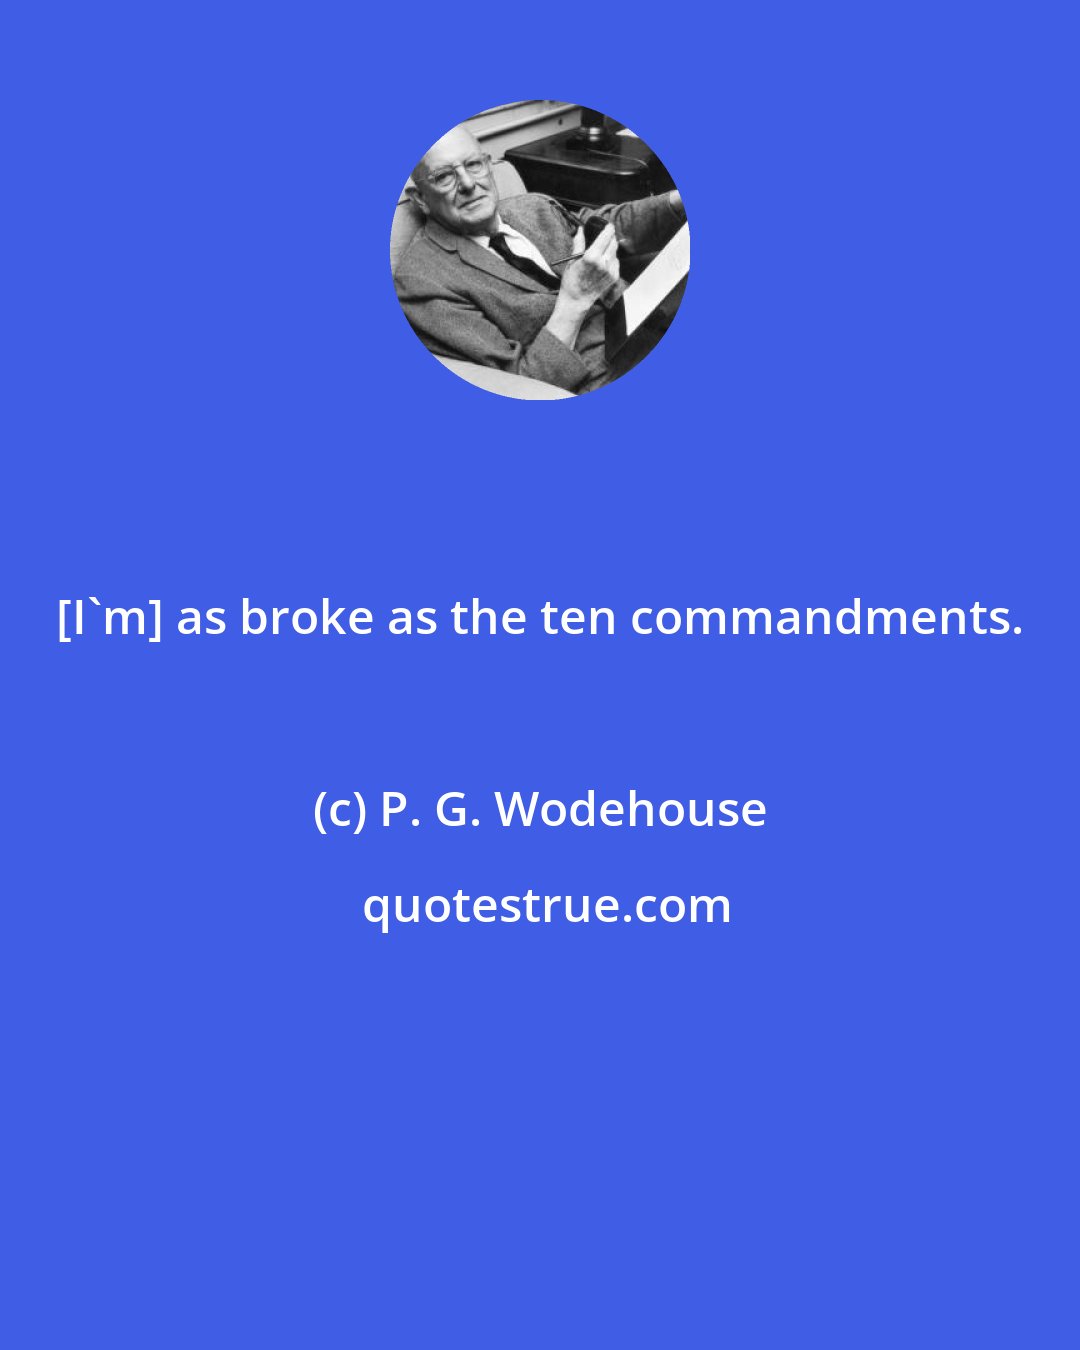 P. G. Wodehouse: [I'm] as broke as the ten commandments.